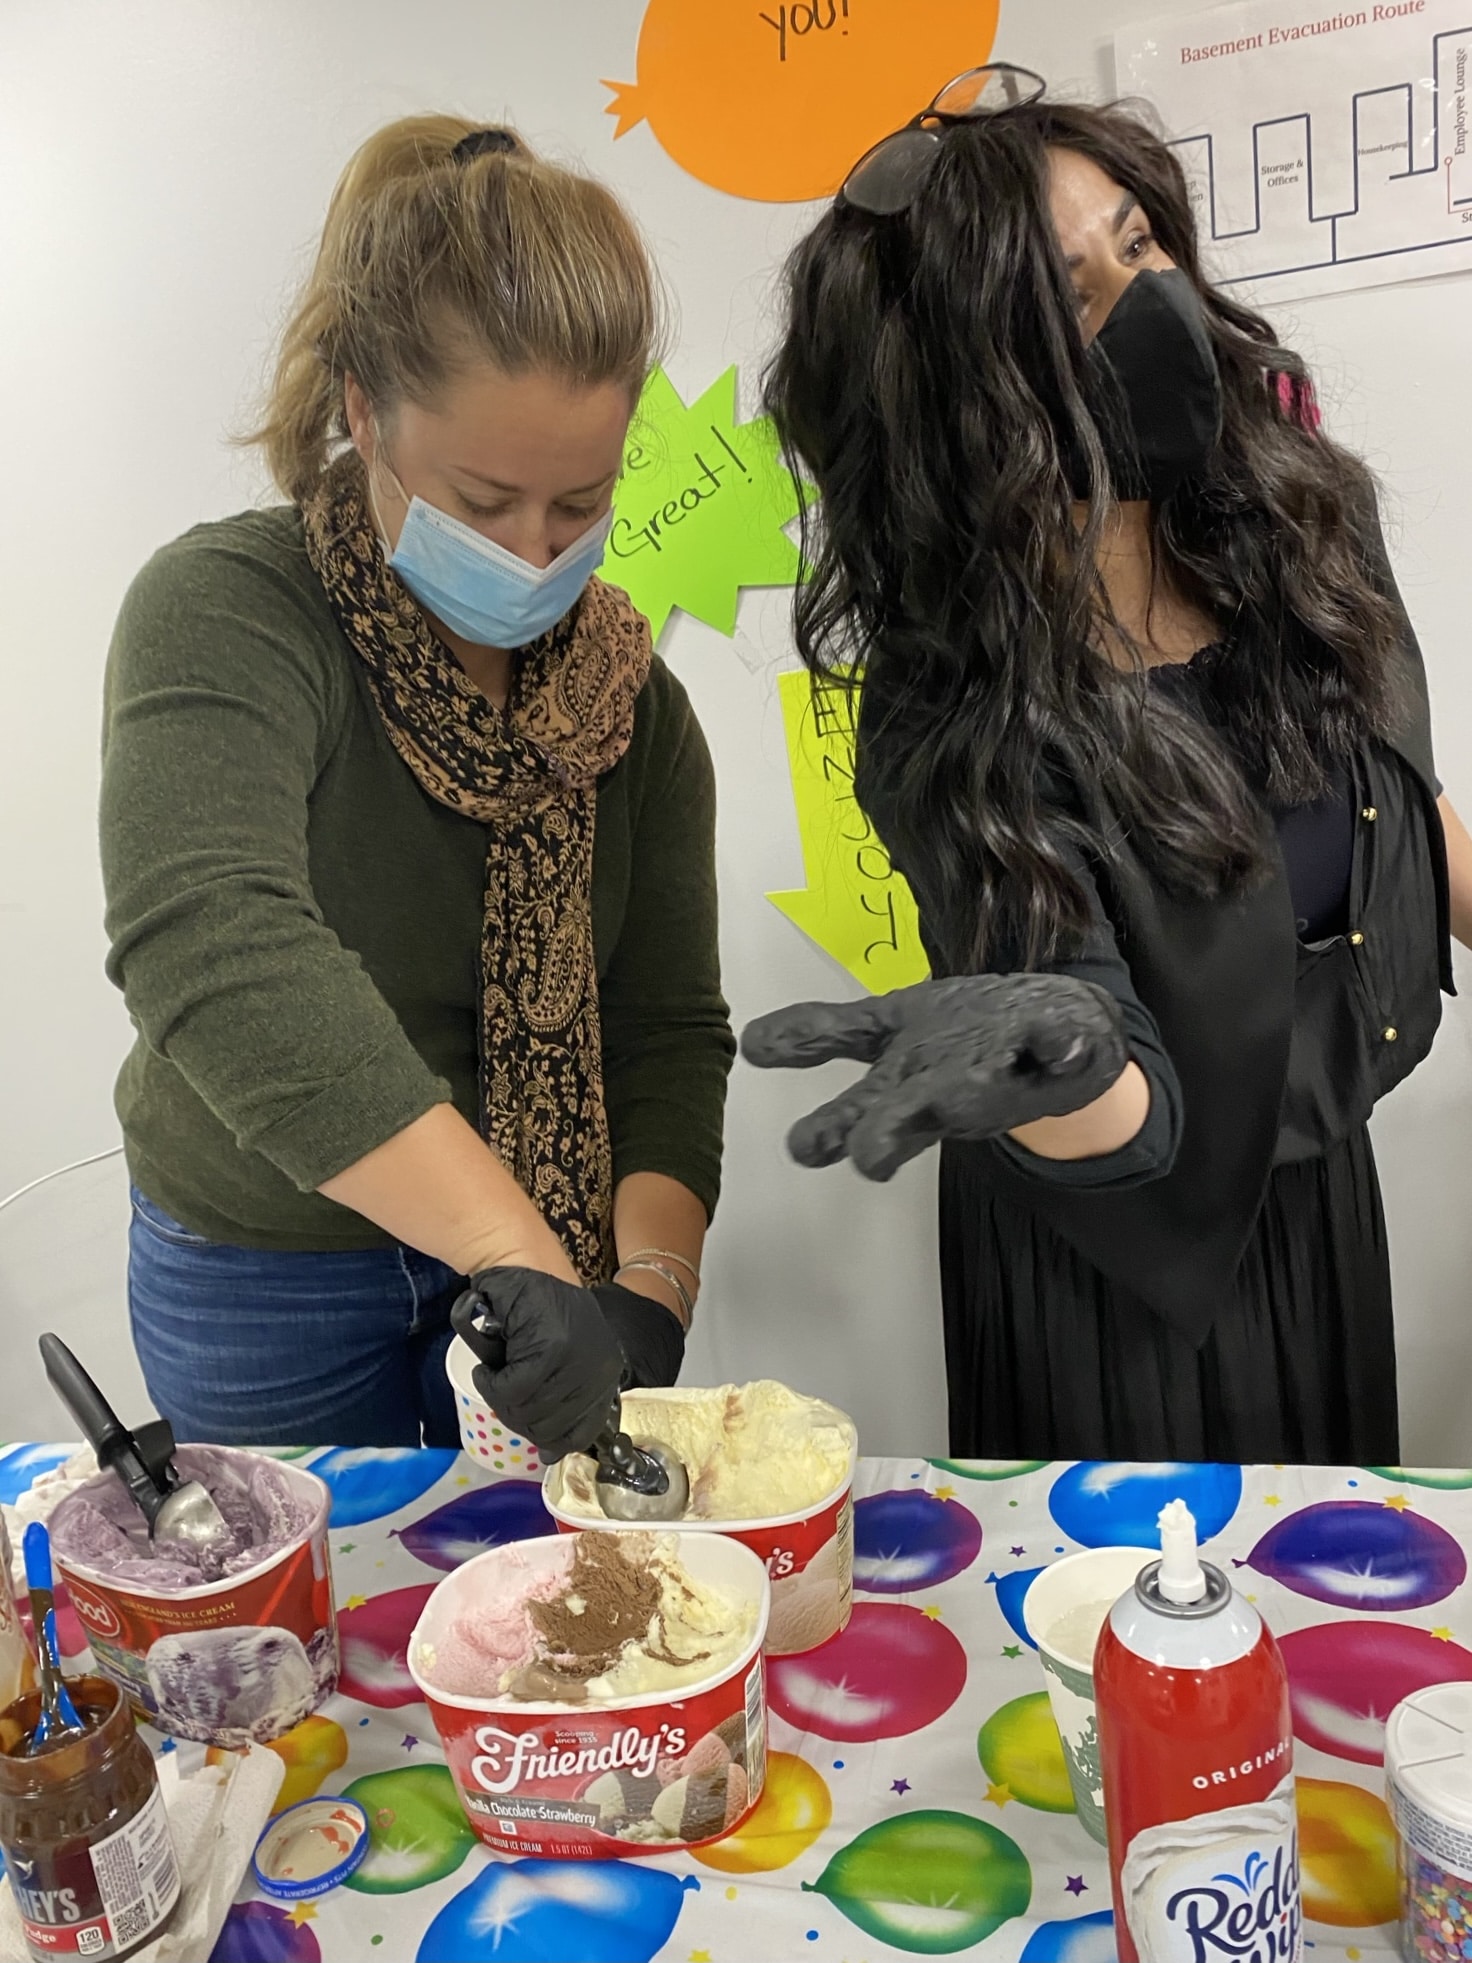 Two women scoop ice cream for housekeeping appreciation week